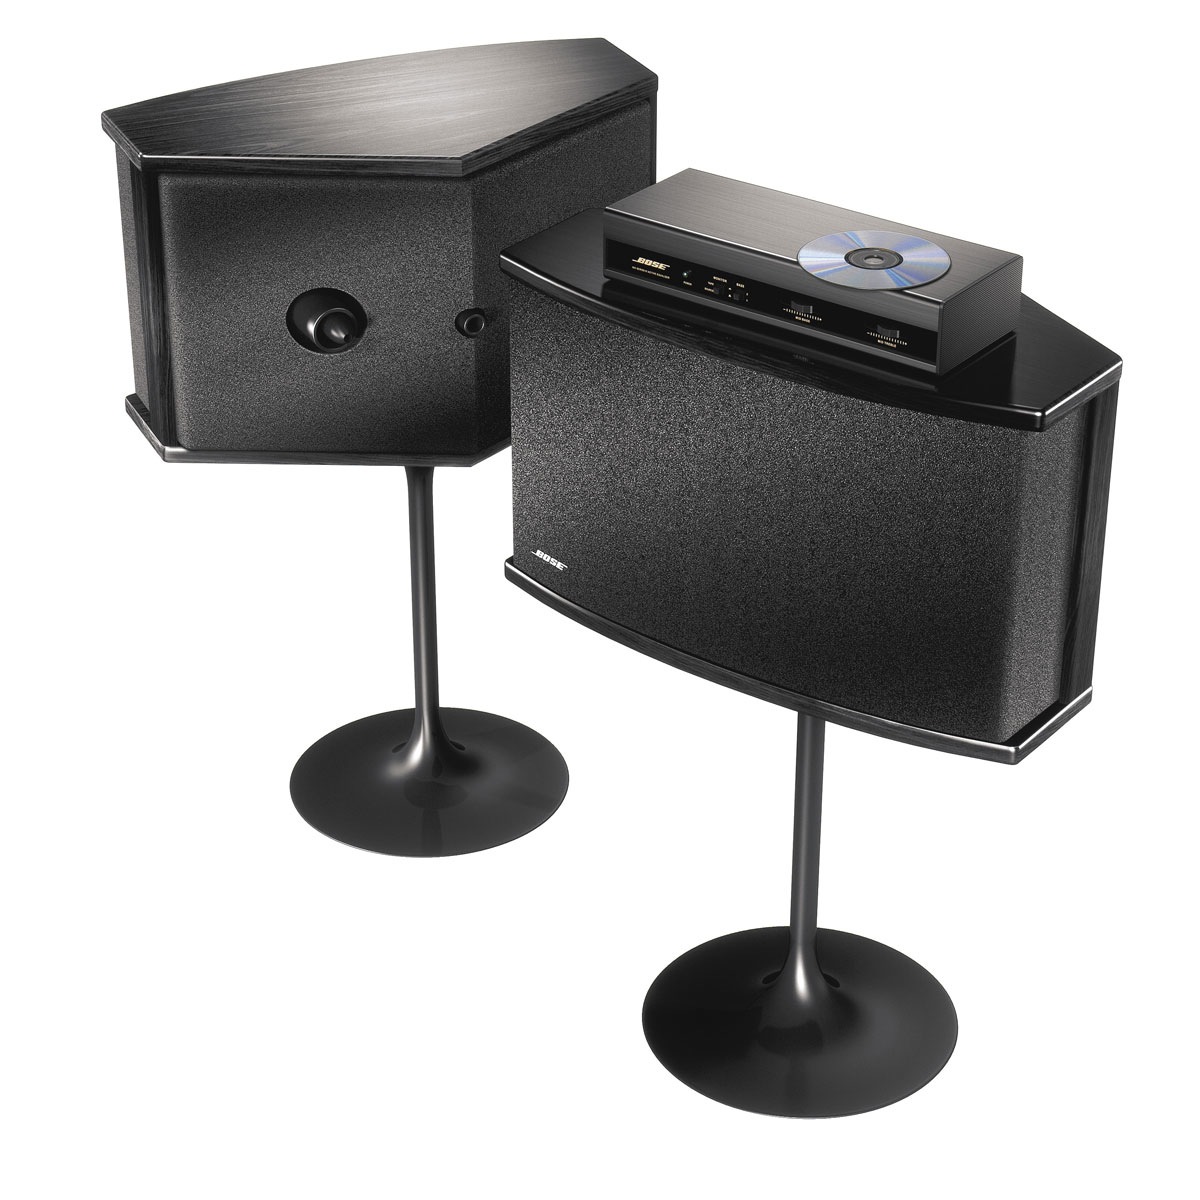 Sistem de boxe stereo Bose 901  - Sistem de boxe stereo Bose 901